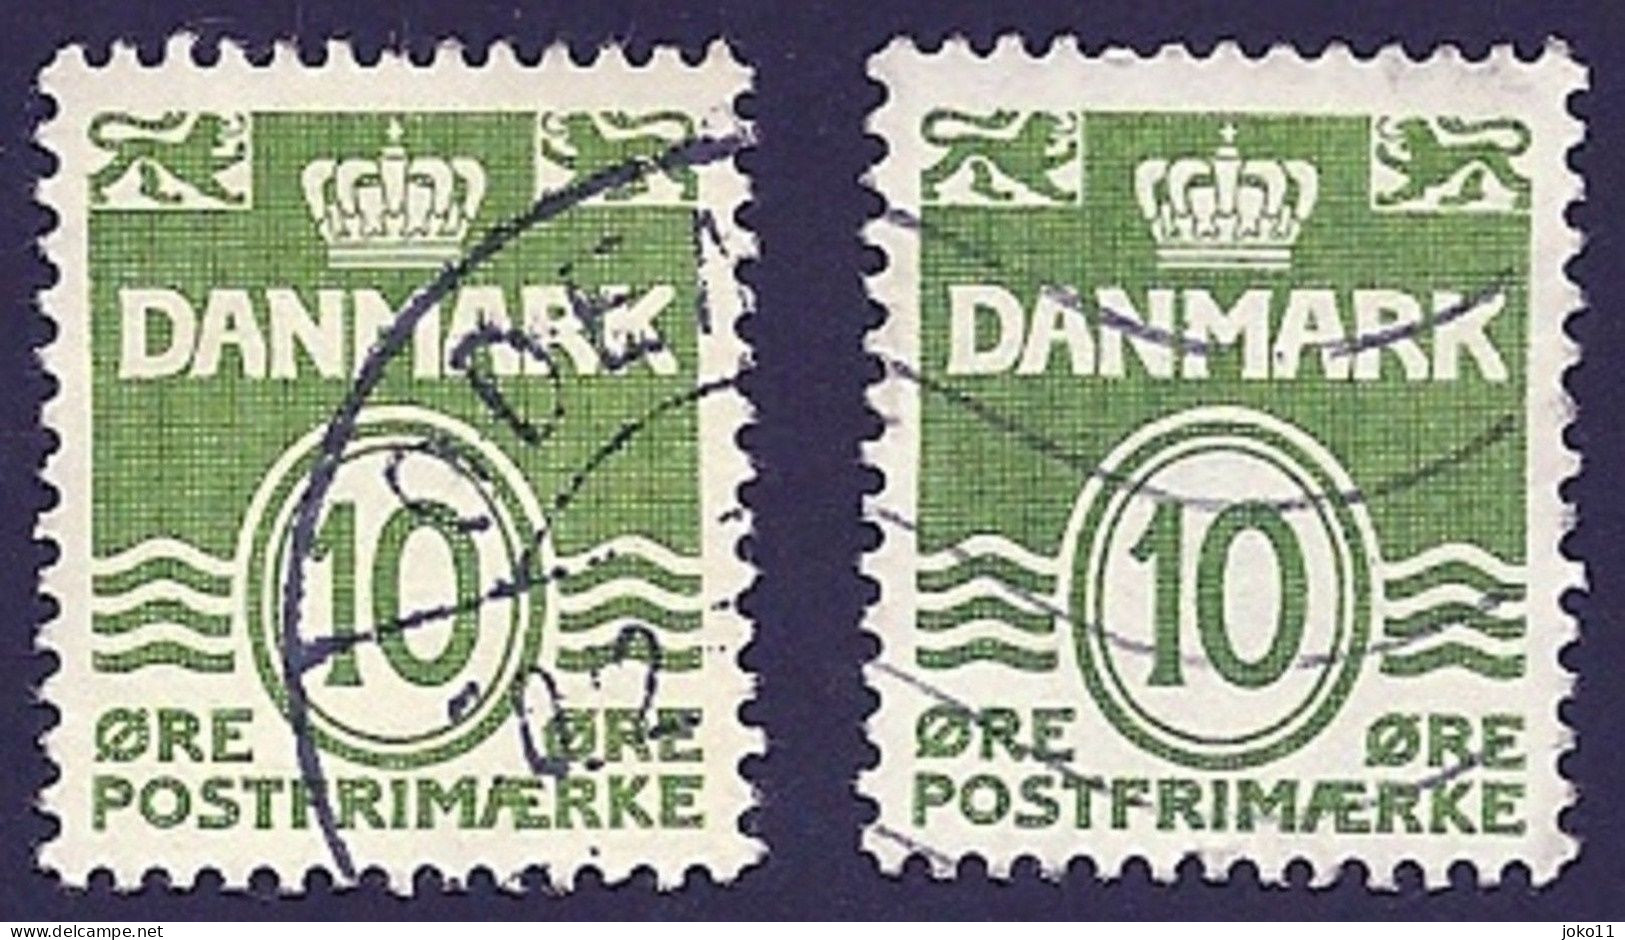 Dänemark 1951, Mi.-Nr. 328 X+y, Gestempelt - Used Stamps